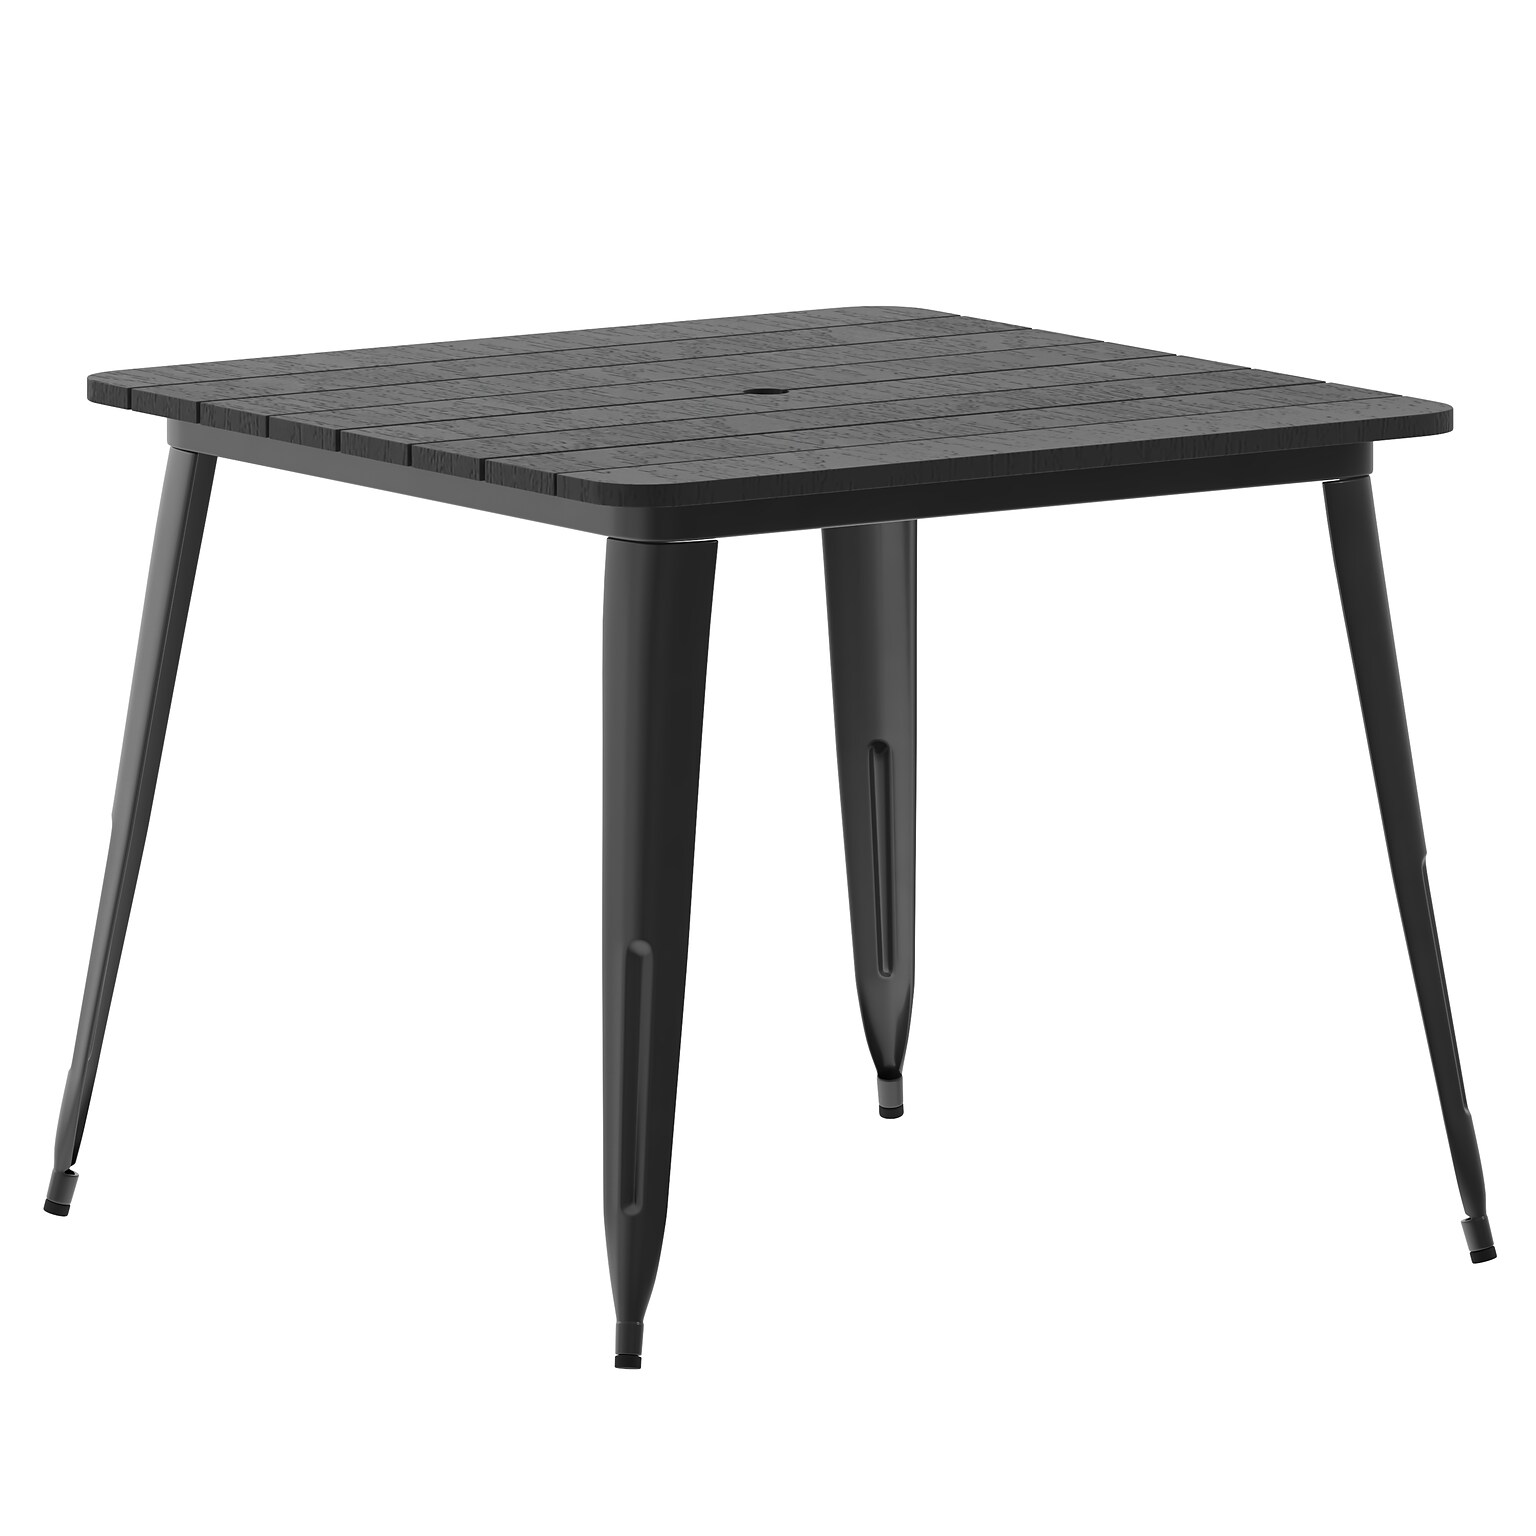 Flash Furniture Declan Indoor/Outdoor Dining Table with Umbrella Hole, 30, Black Top and Black Base (JJT1461990BKBK)